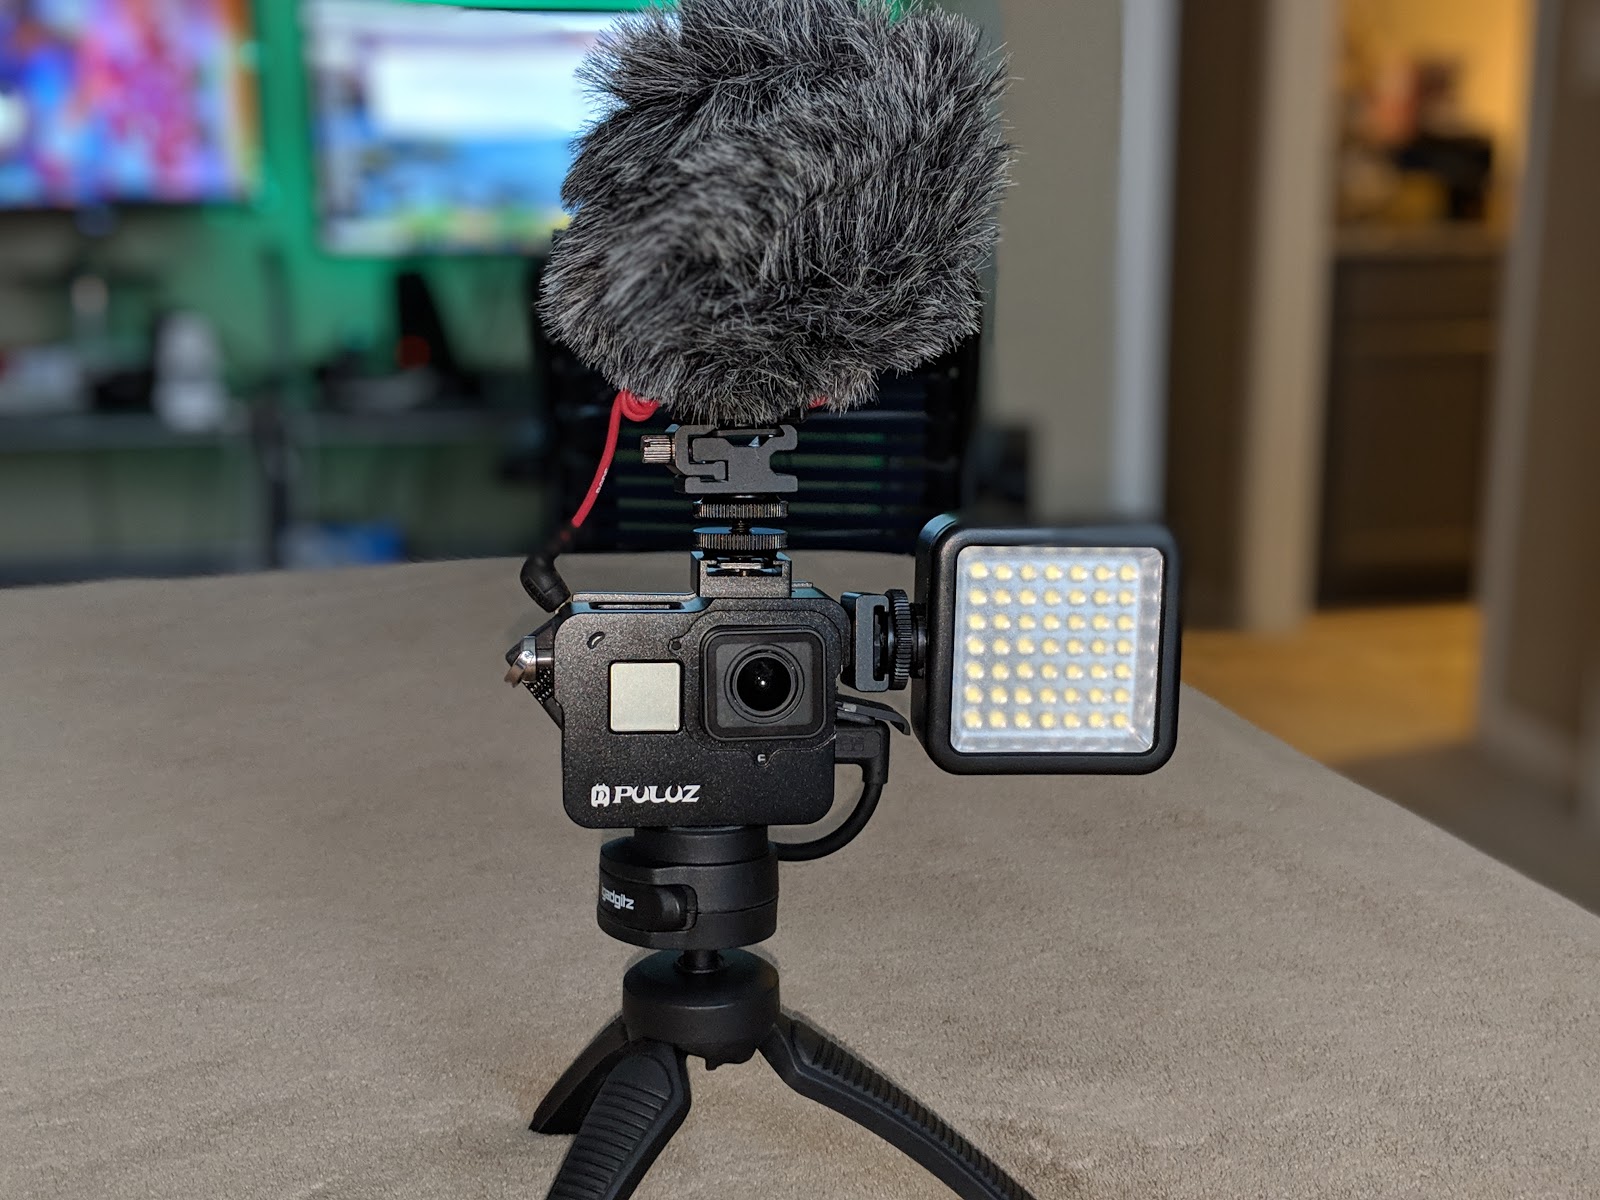 Product Reviews & Tips: My GOPro Hero 7 Vlogging Setup